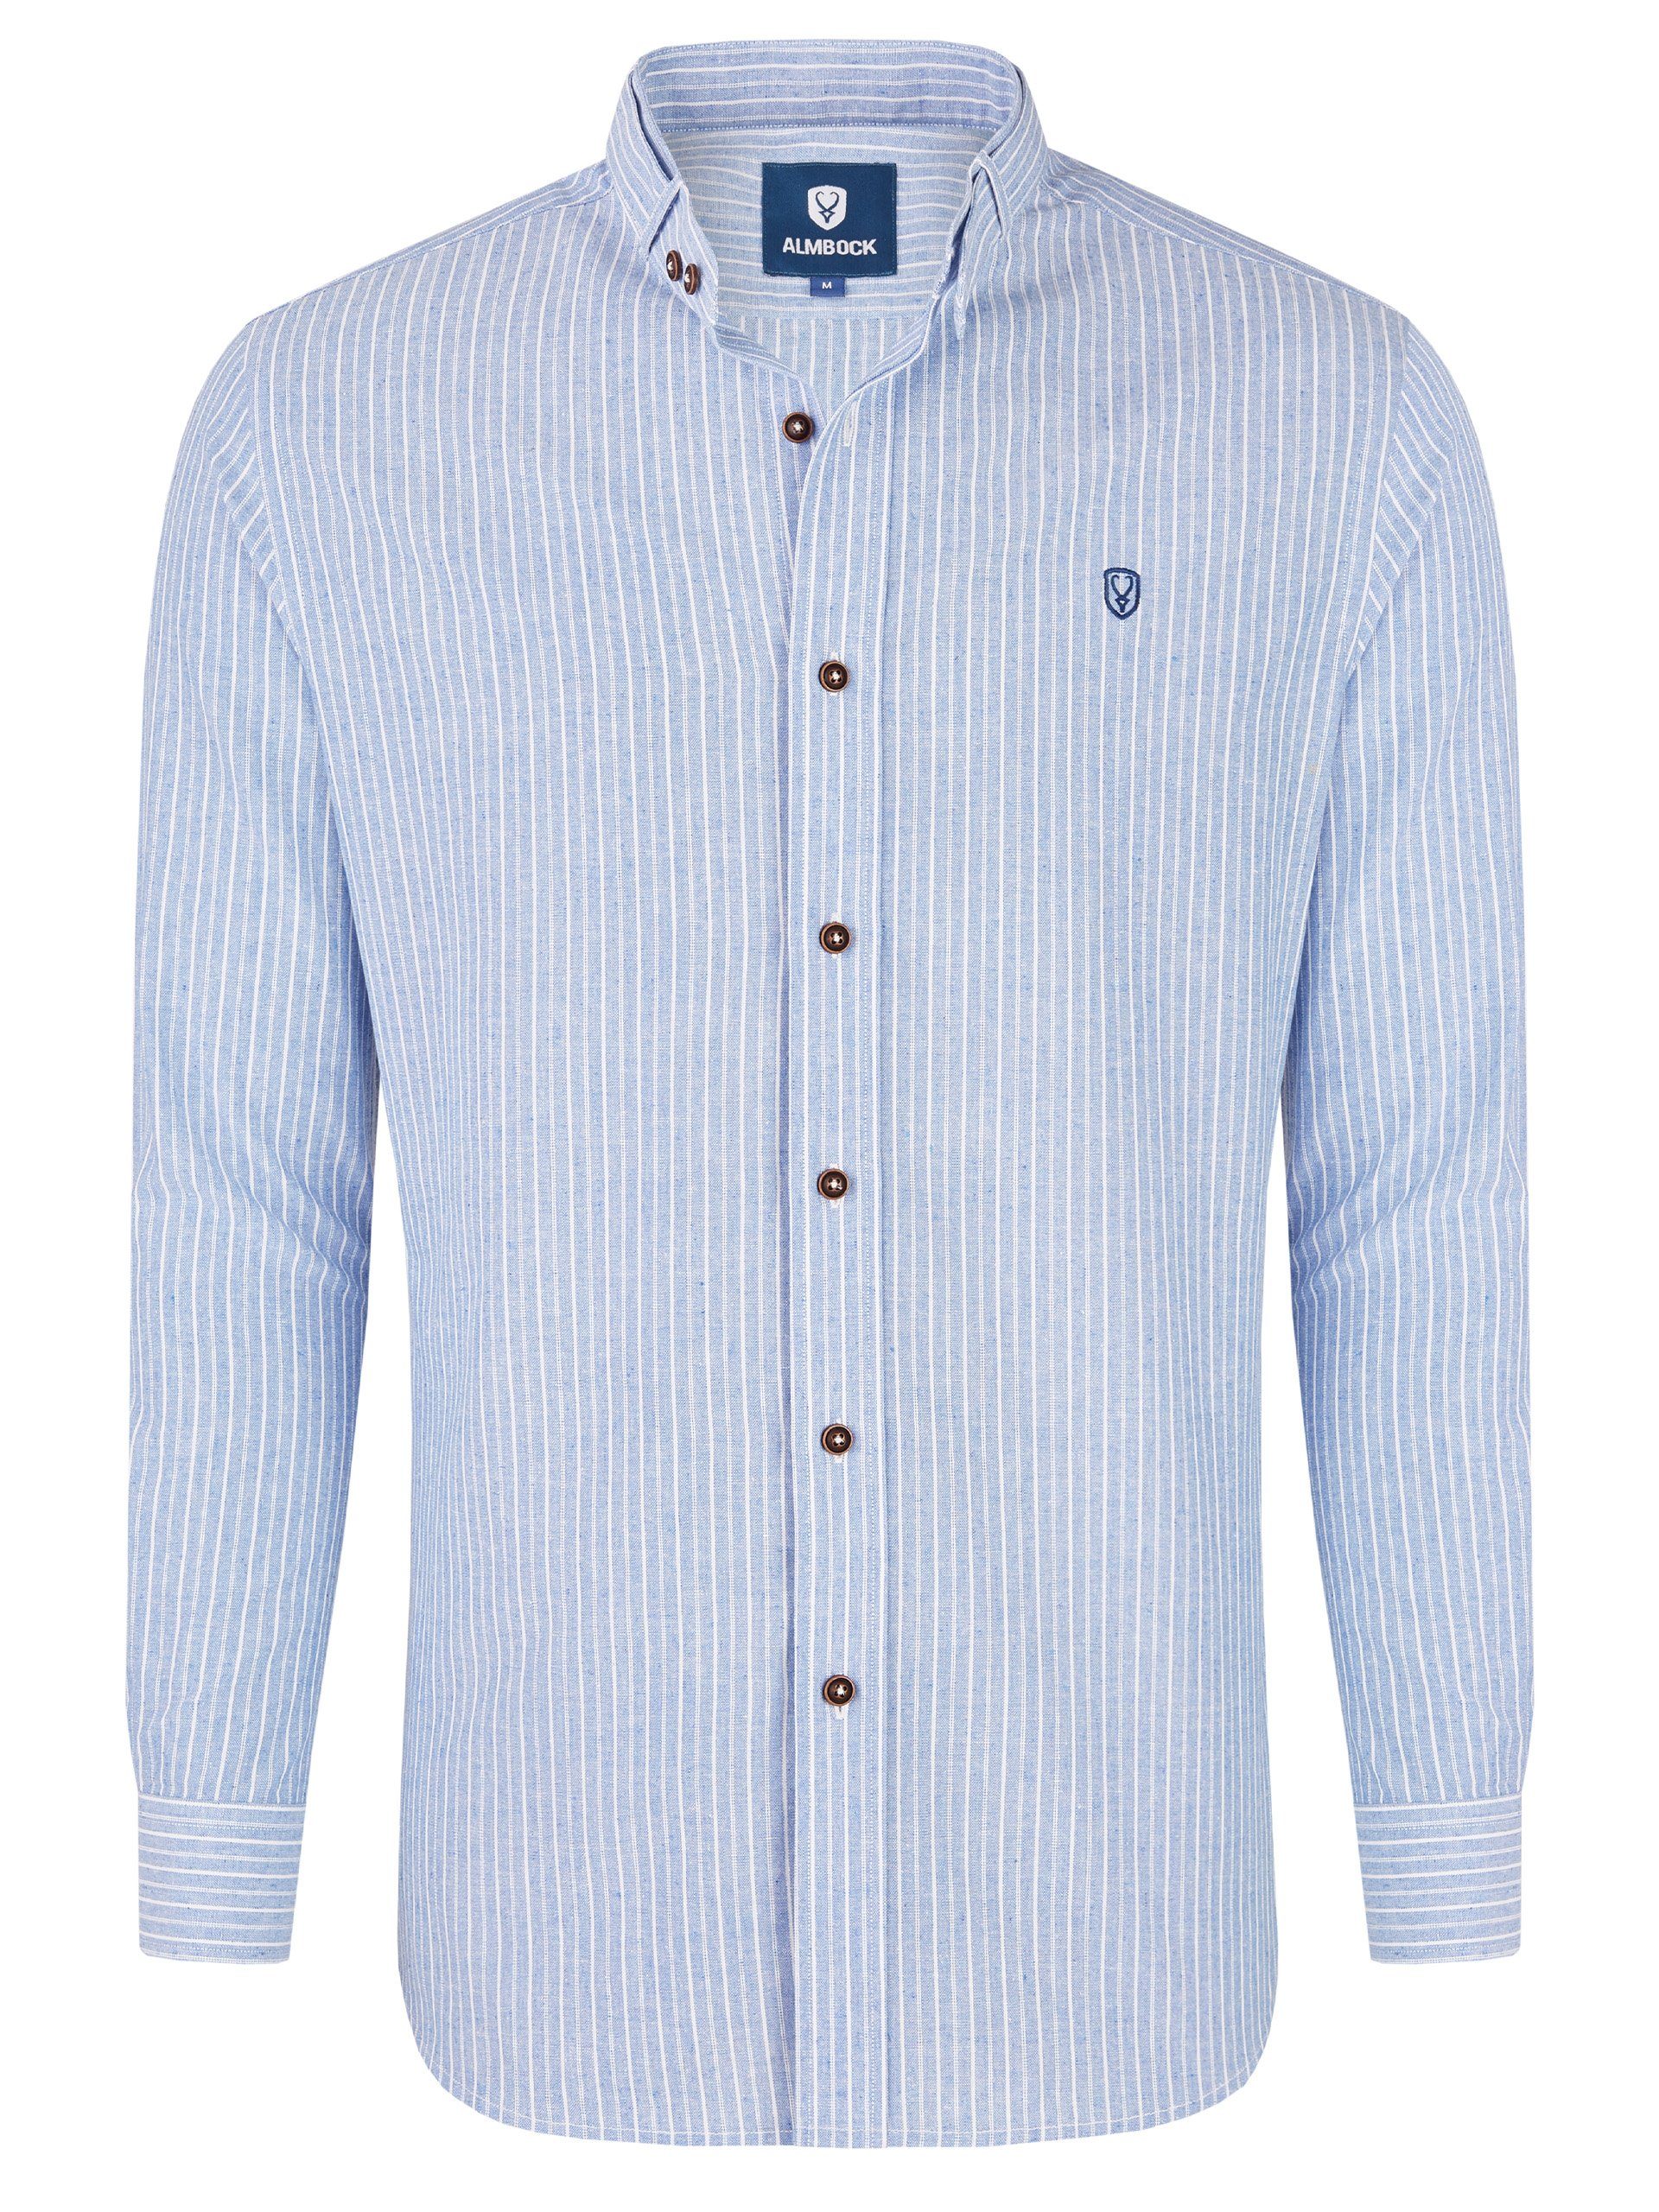 Almbock Trachtenhemd Herrenhemd Florian hellblau-weiß-gestreift | Trachtenhemden